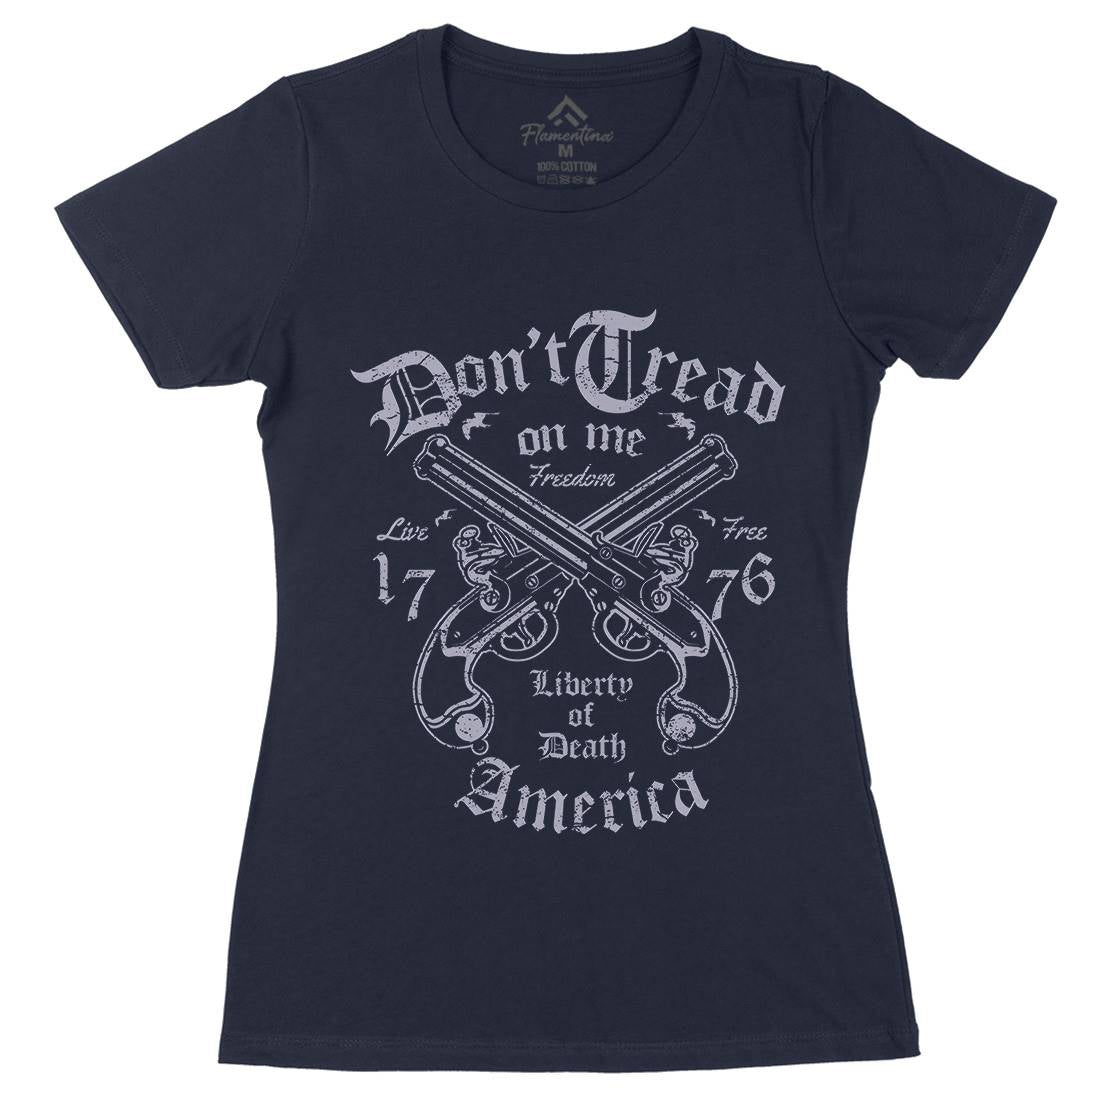 Liberty Of Death Womens Organic Crew Neck T-Shirt American A084